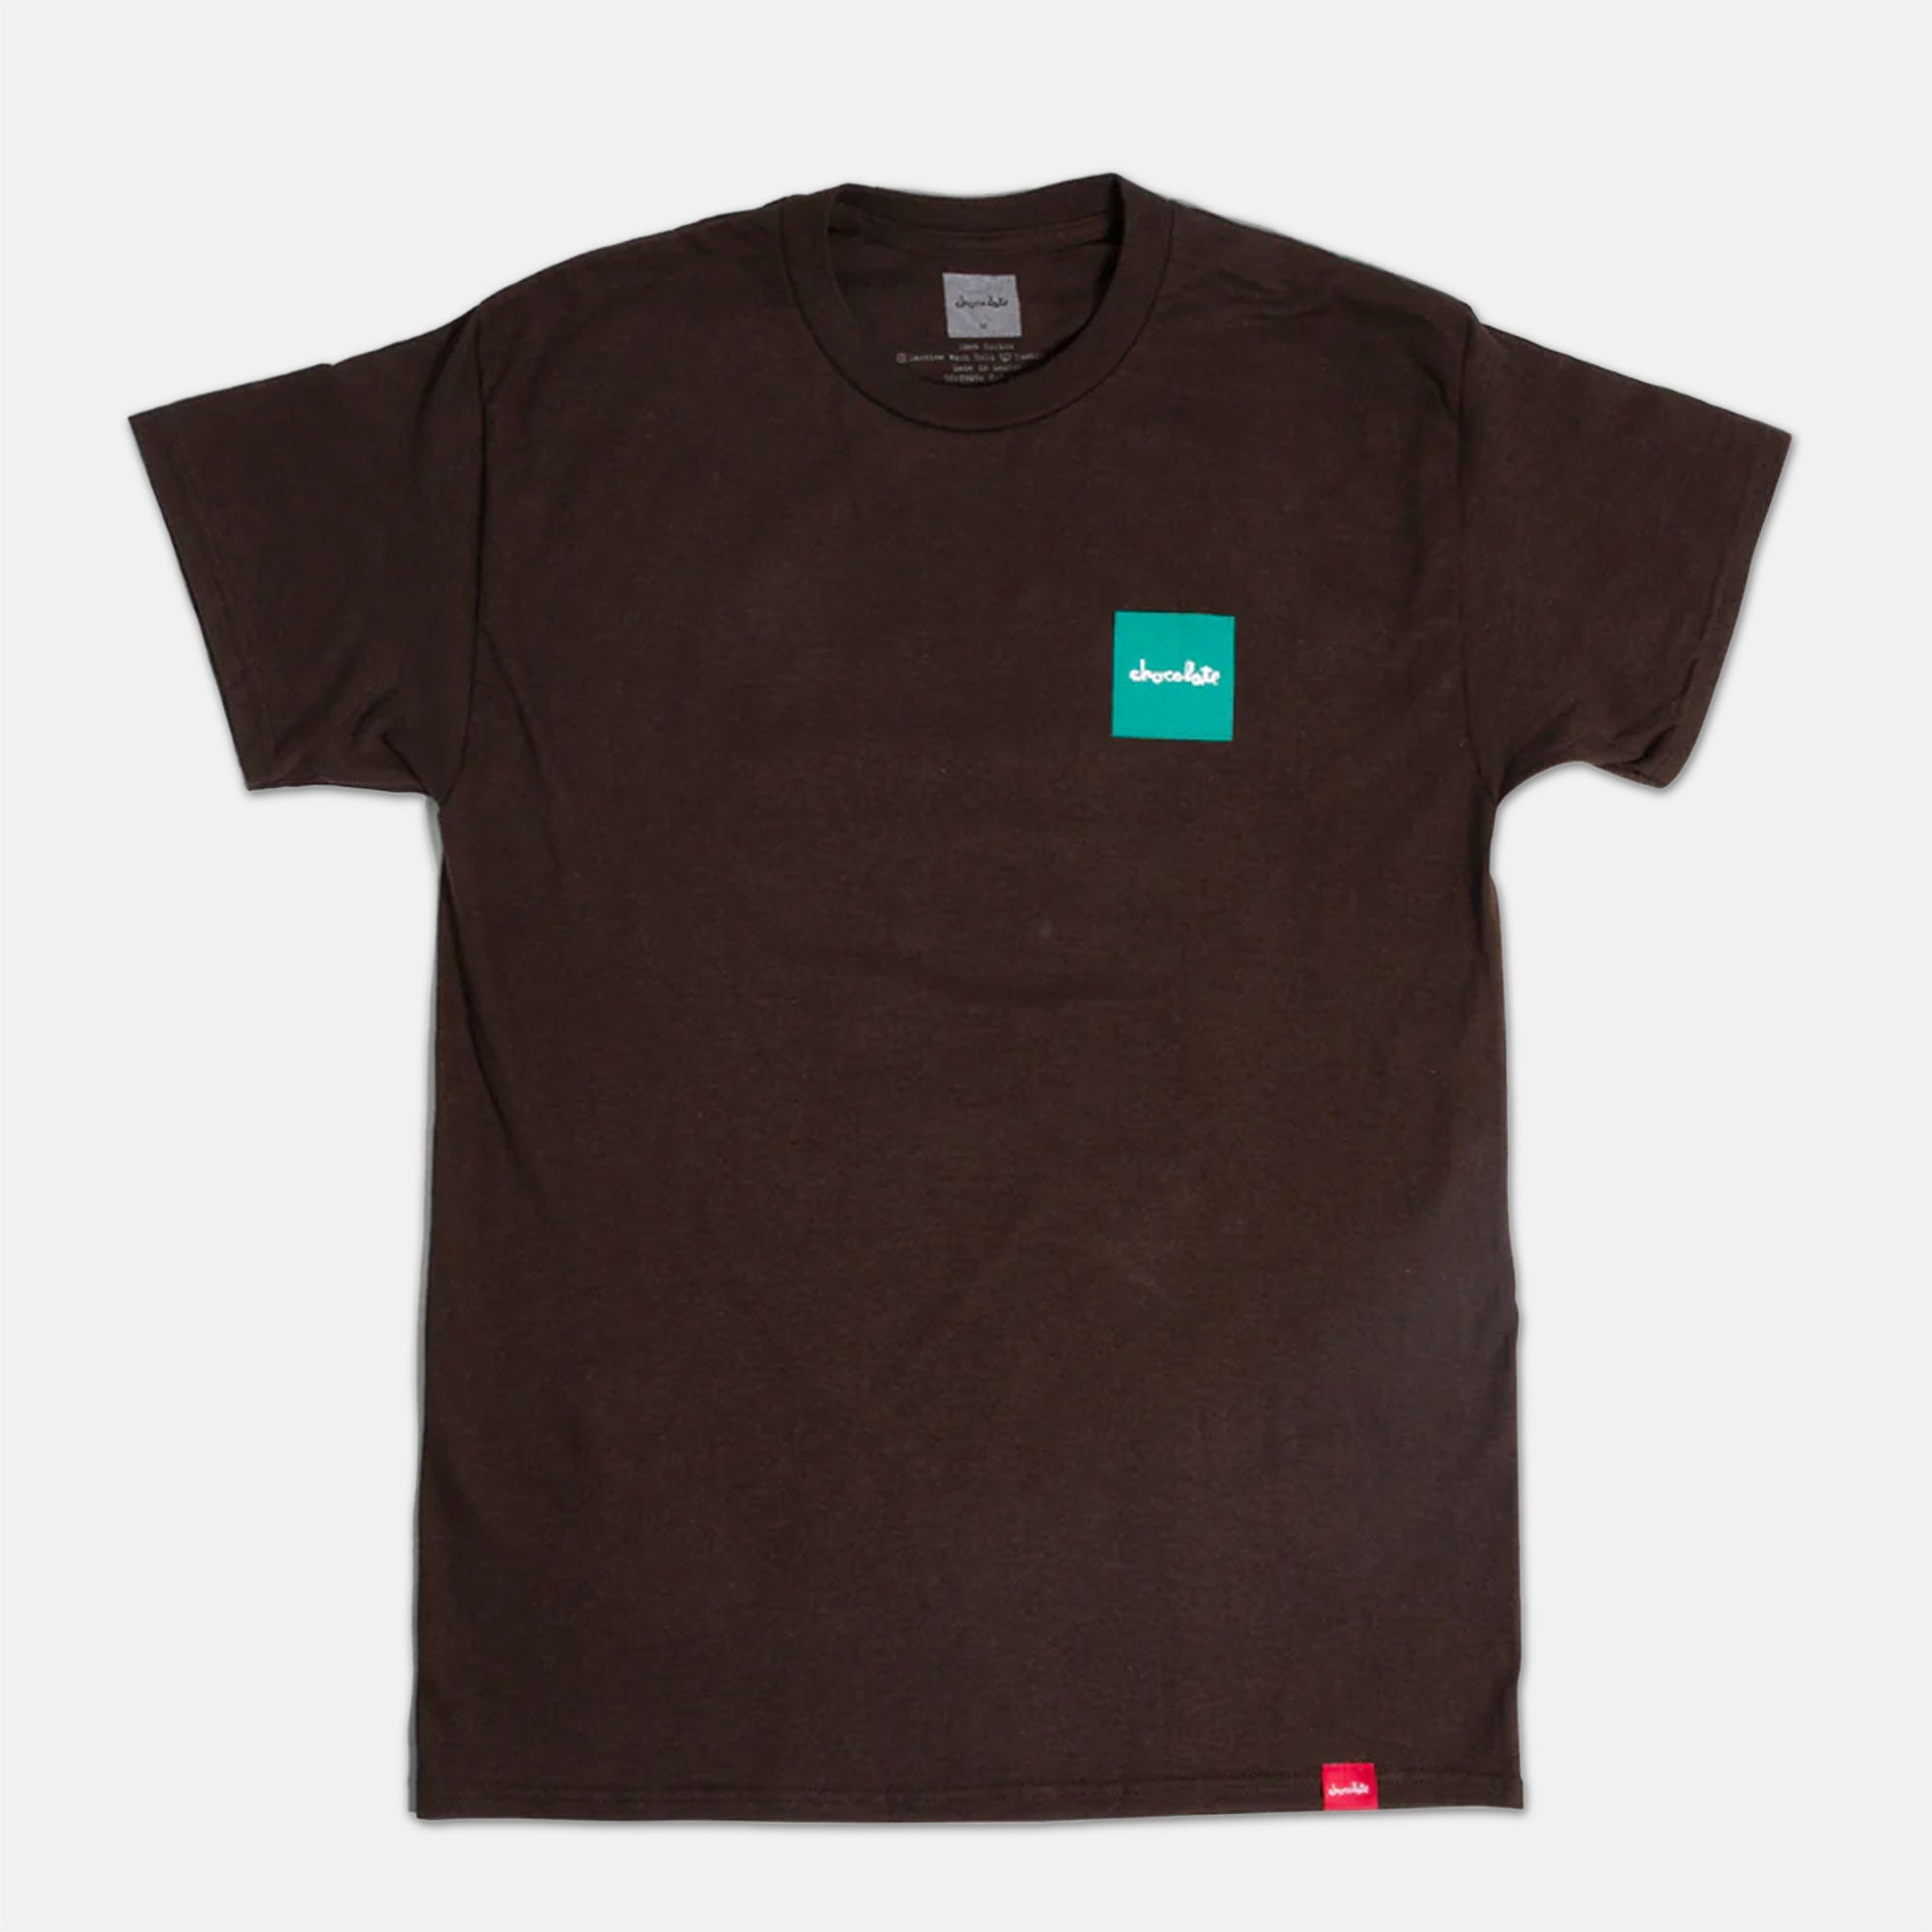 Chocolate Skateboards - OG Square T-Shirt - Brown